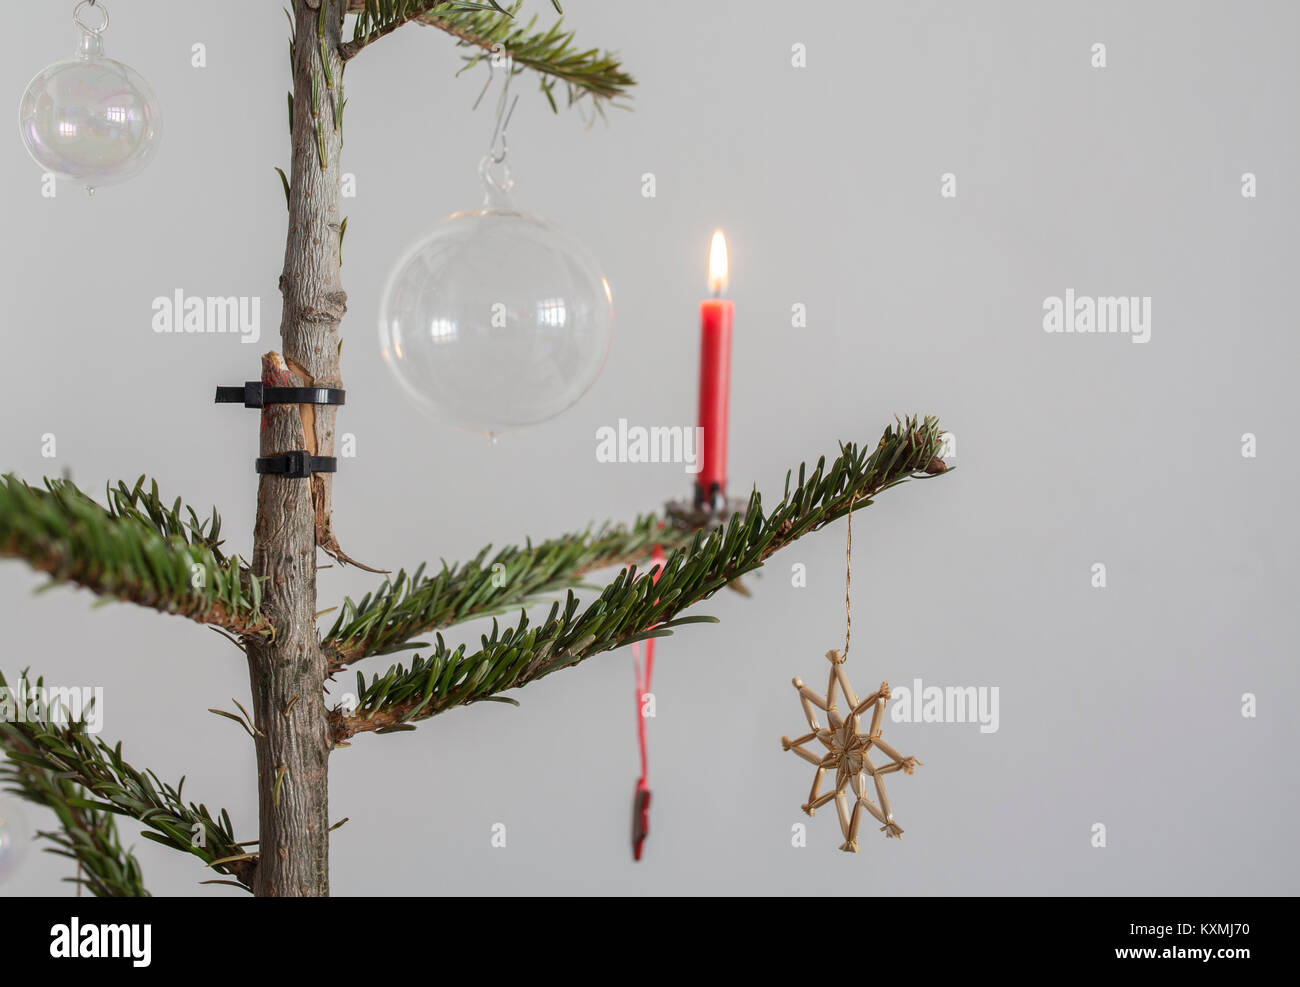 Albero di natale con candela e sfera di vetro fissato con una fascetta per cavi - Mit einem Kabelbinder reparierter Weihnachtsbaum mit Kerze und Glaskugel Foto Stock